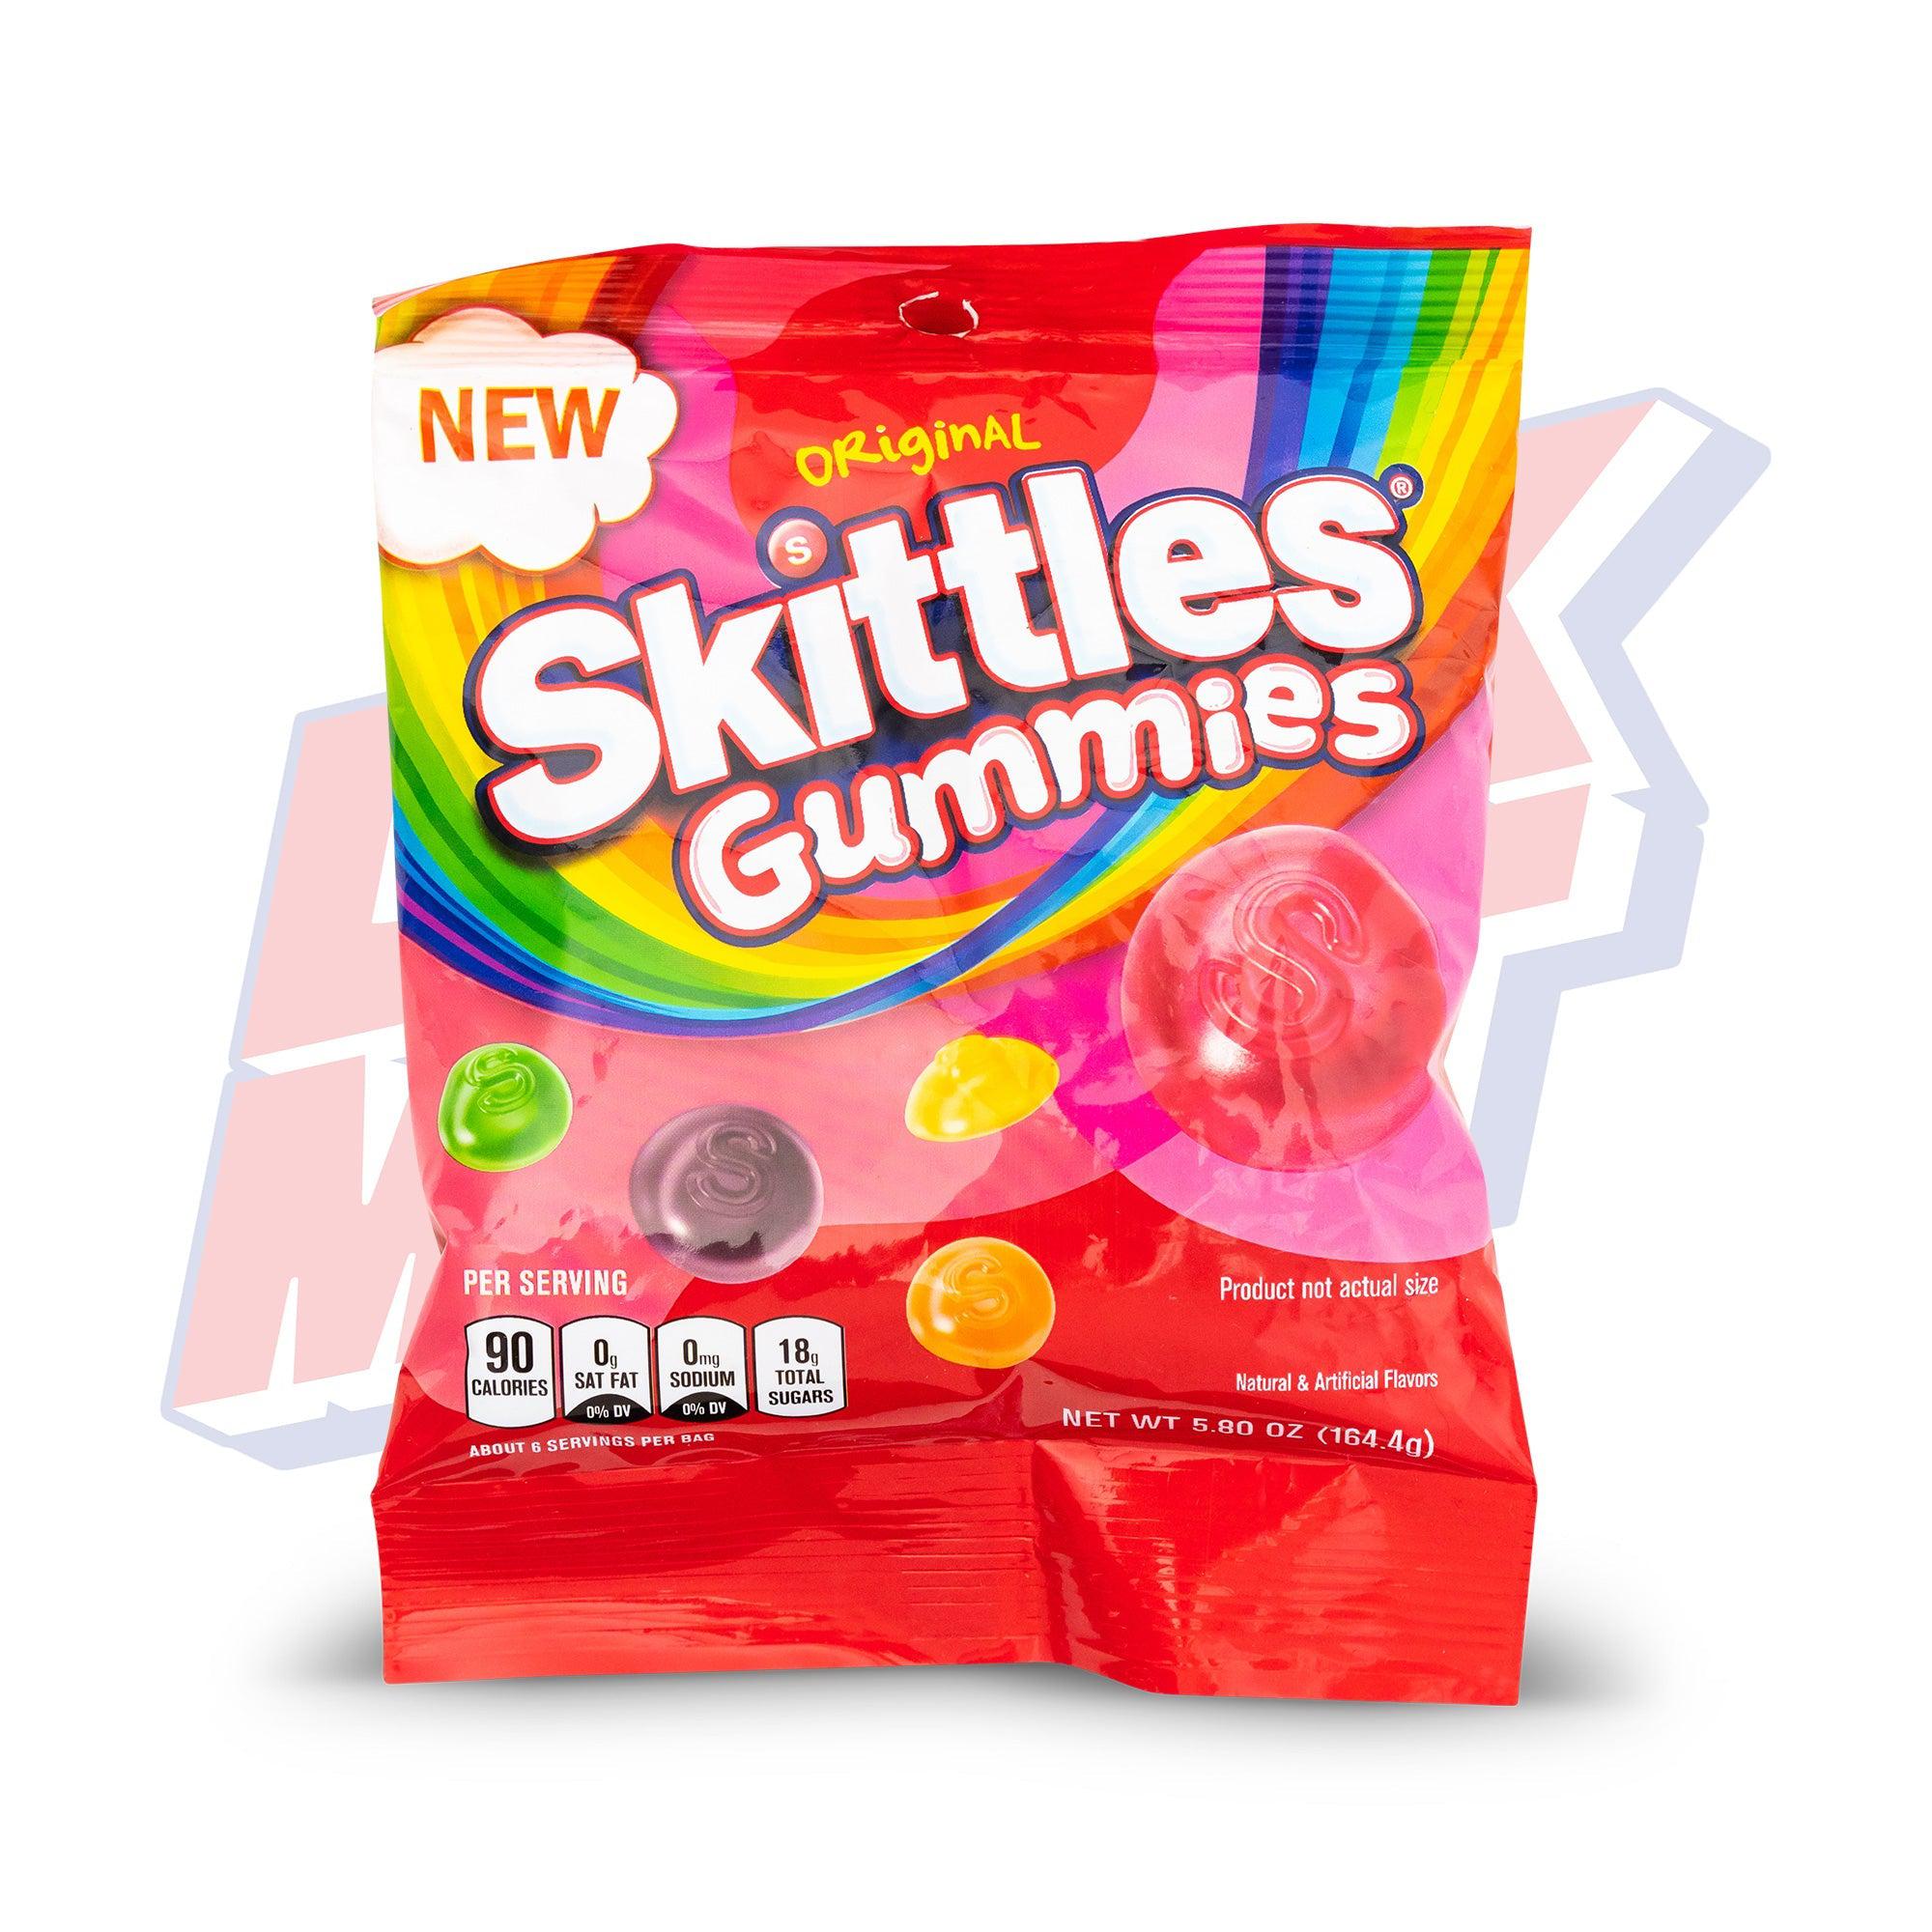 Skittles Bonbons gummy originaux, sac - 164 g